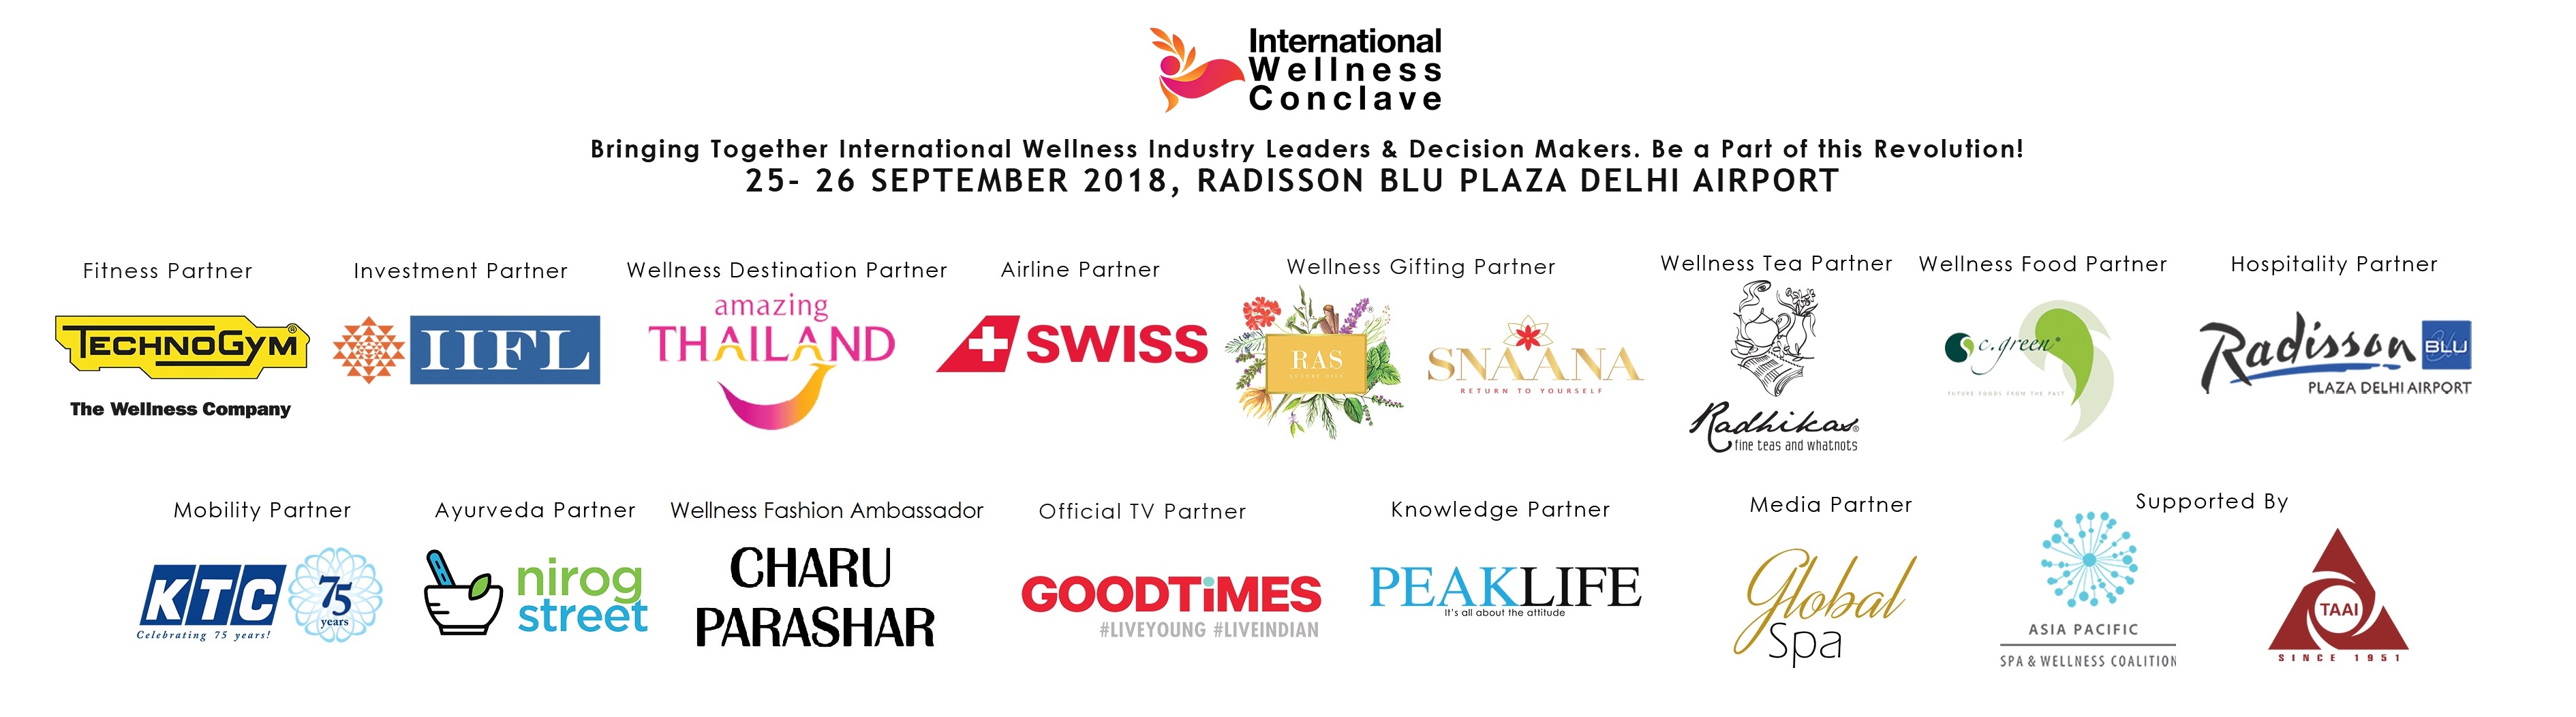 International Wellness Conclave- New Delhi 2018